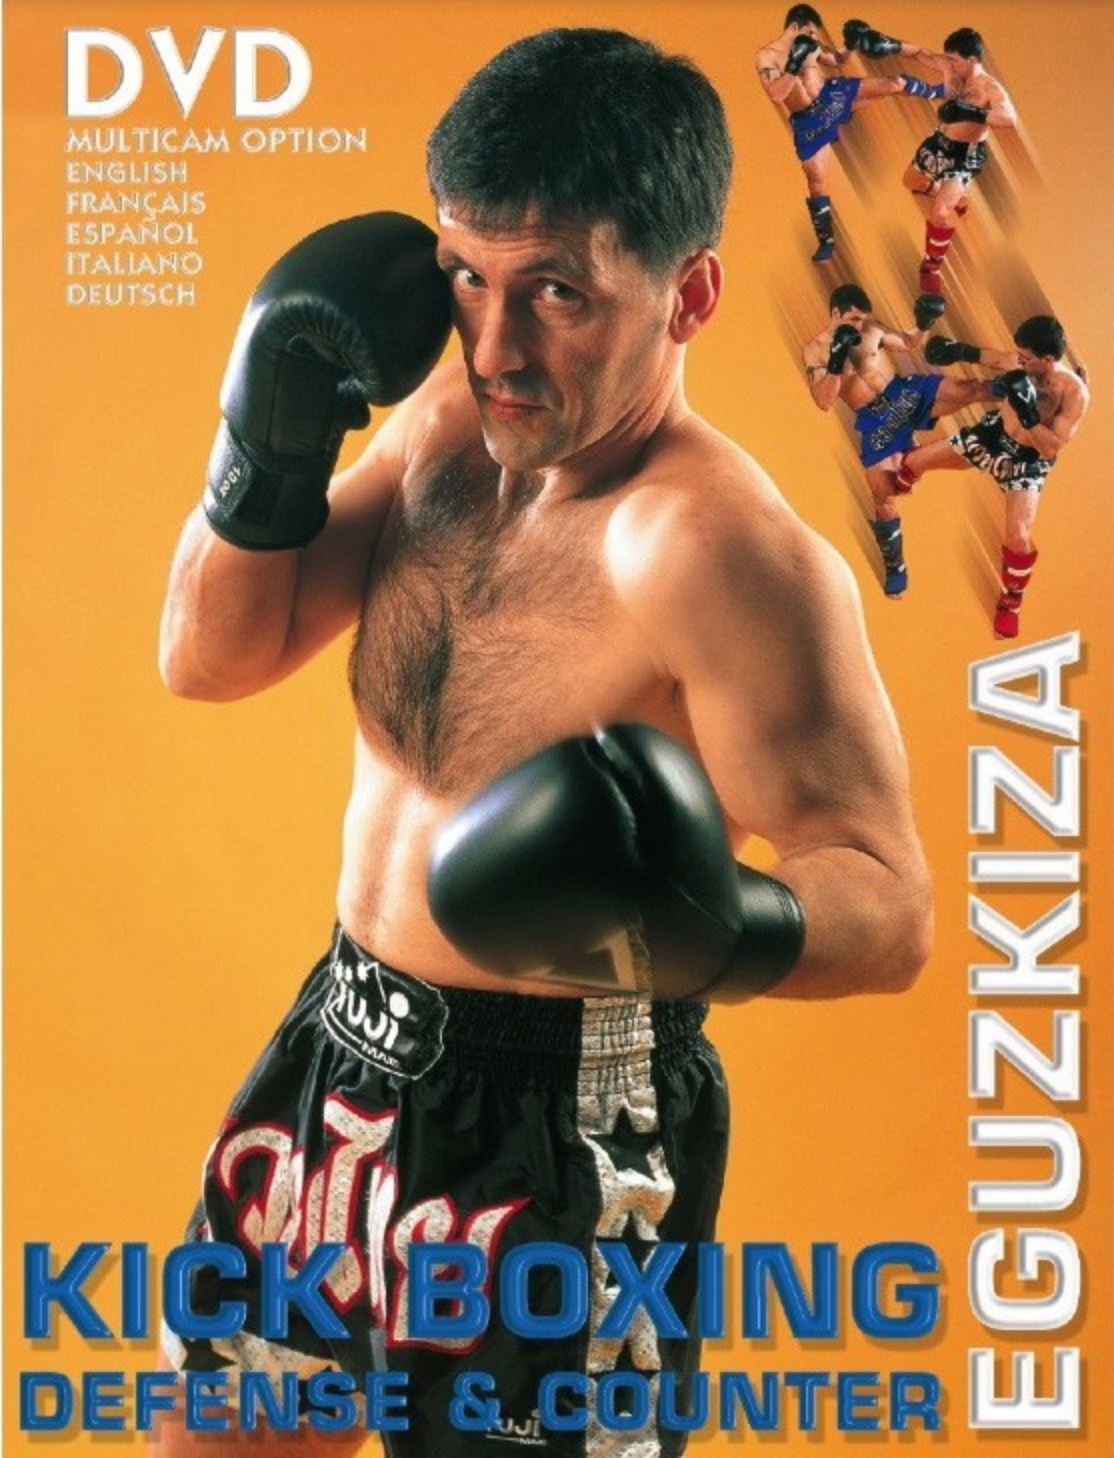 Kick Boxing Defense & Counters DVD by Jose Vicente Eguzkiza - Budovideos Inc